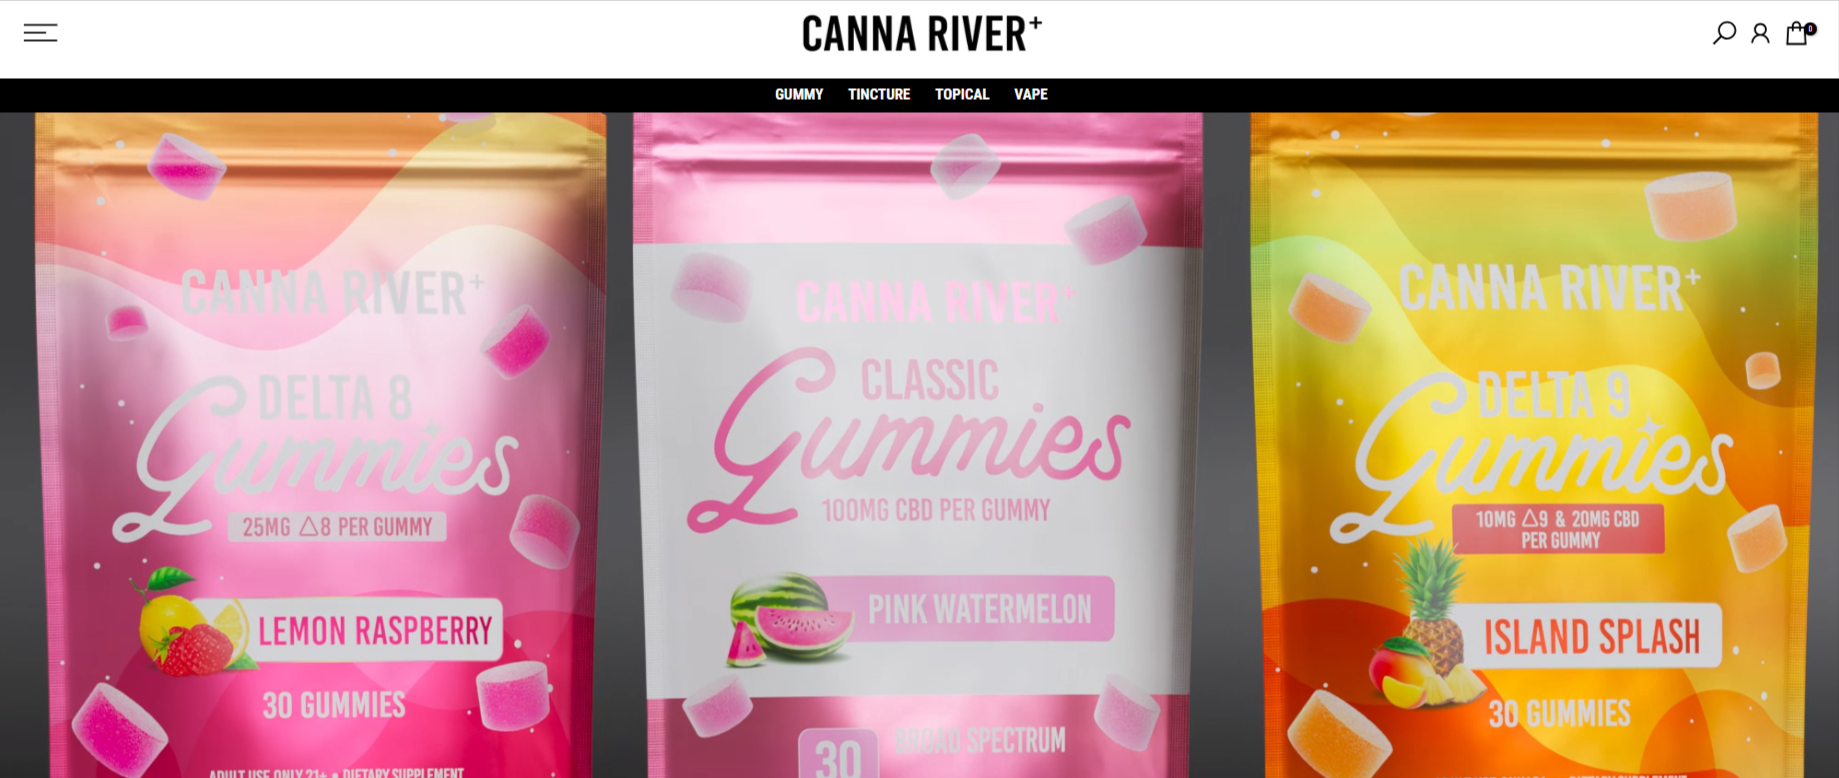 Canna River Reviews